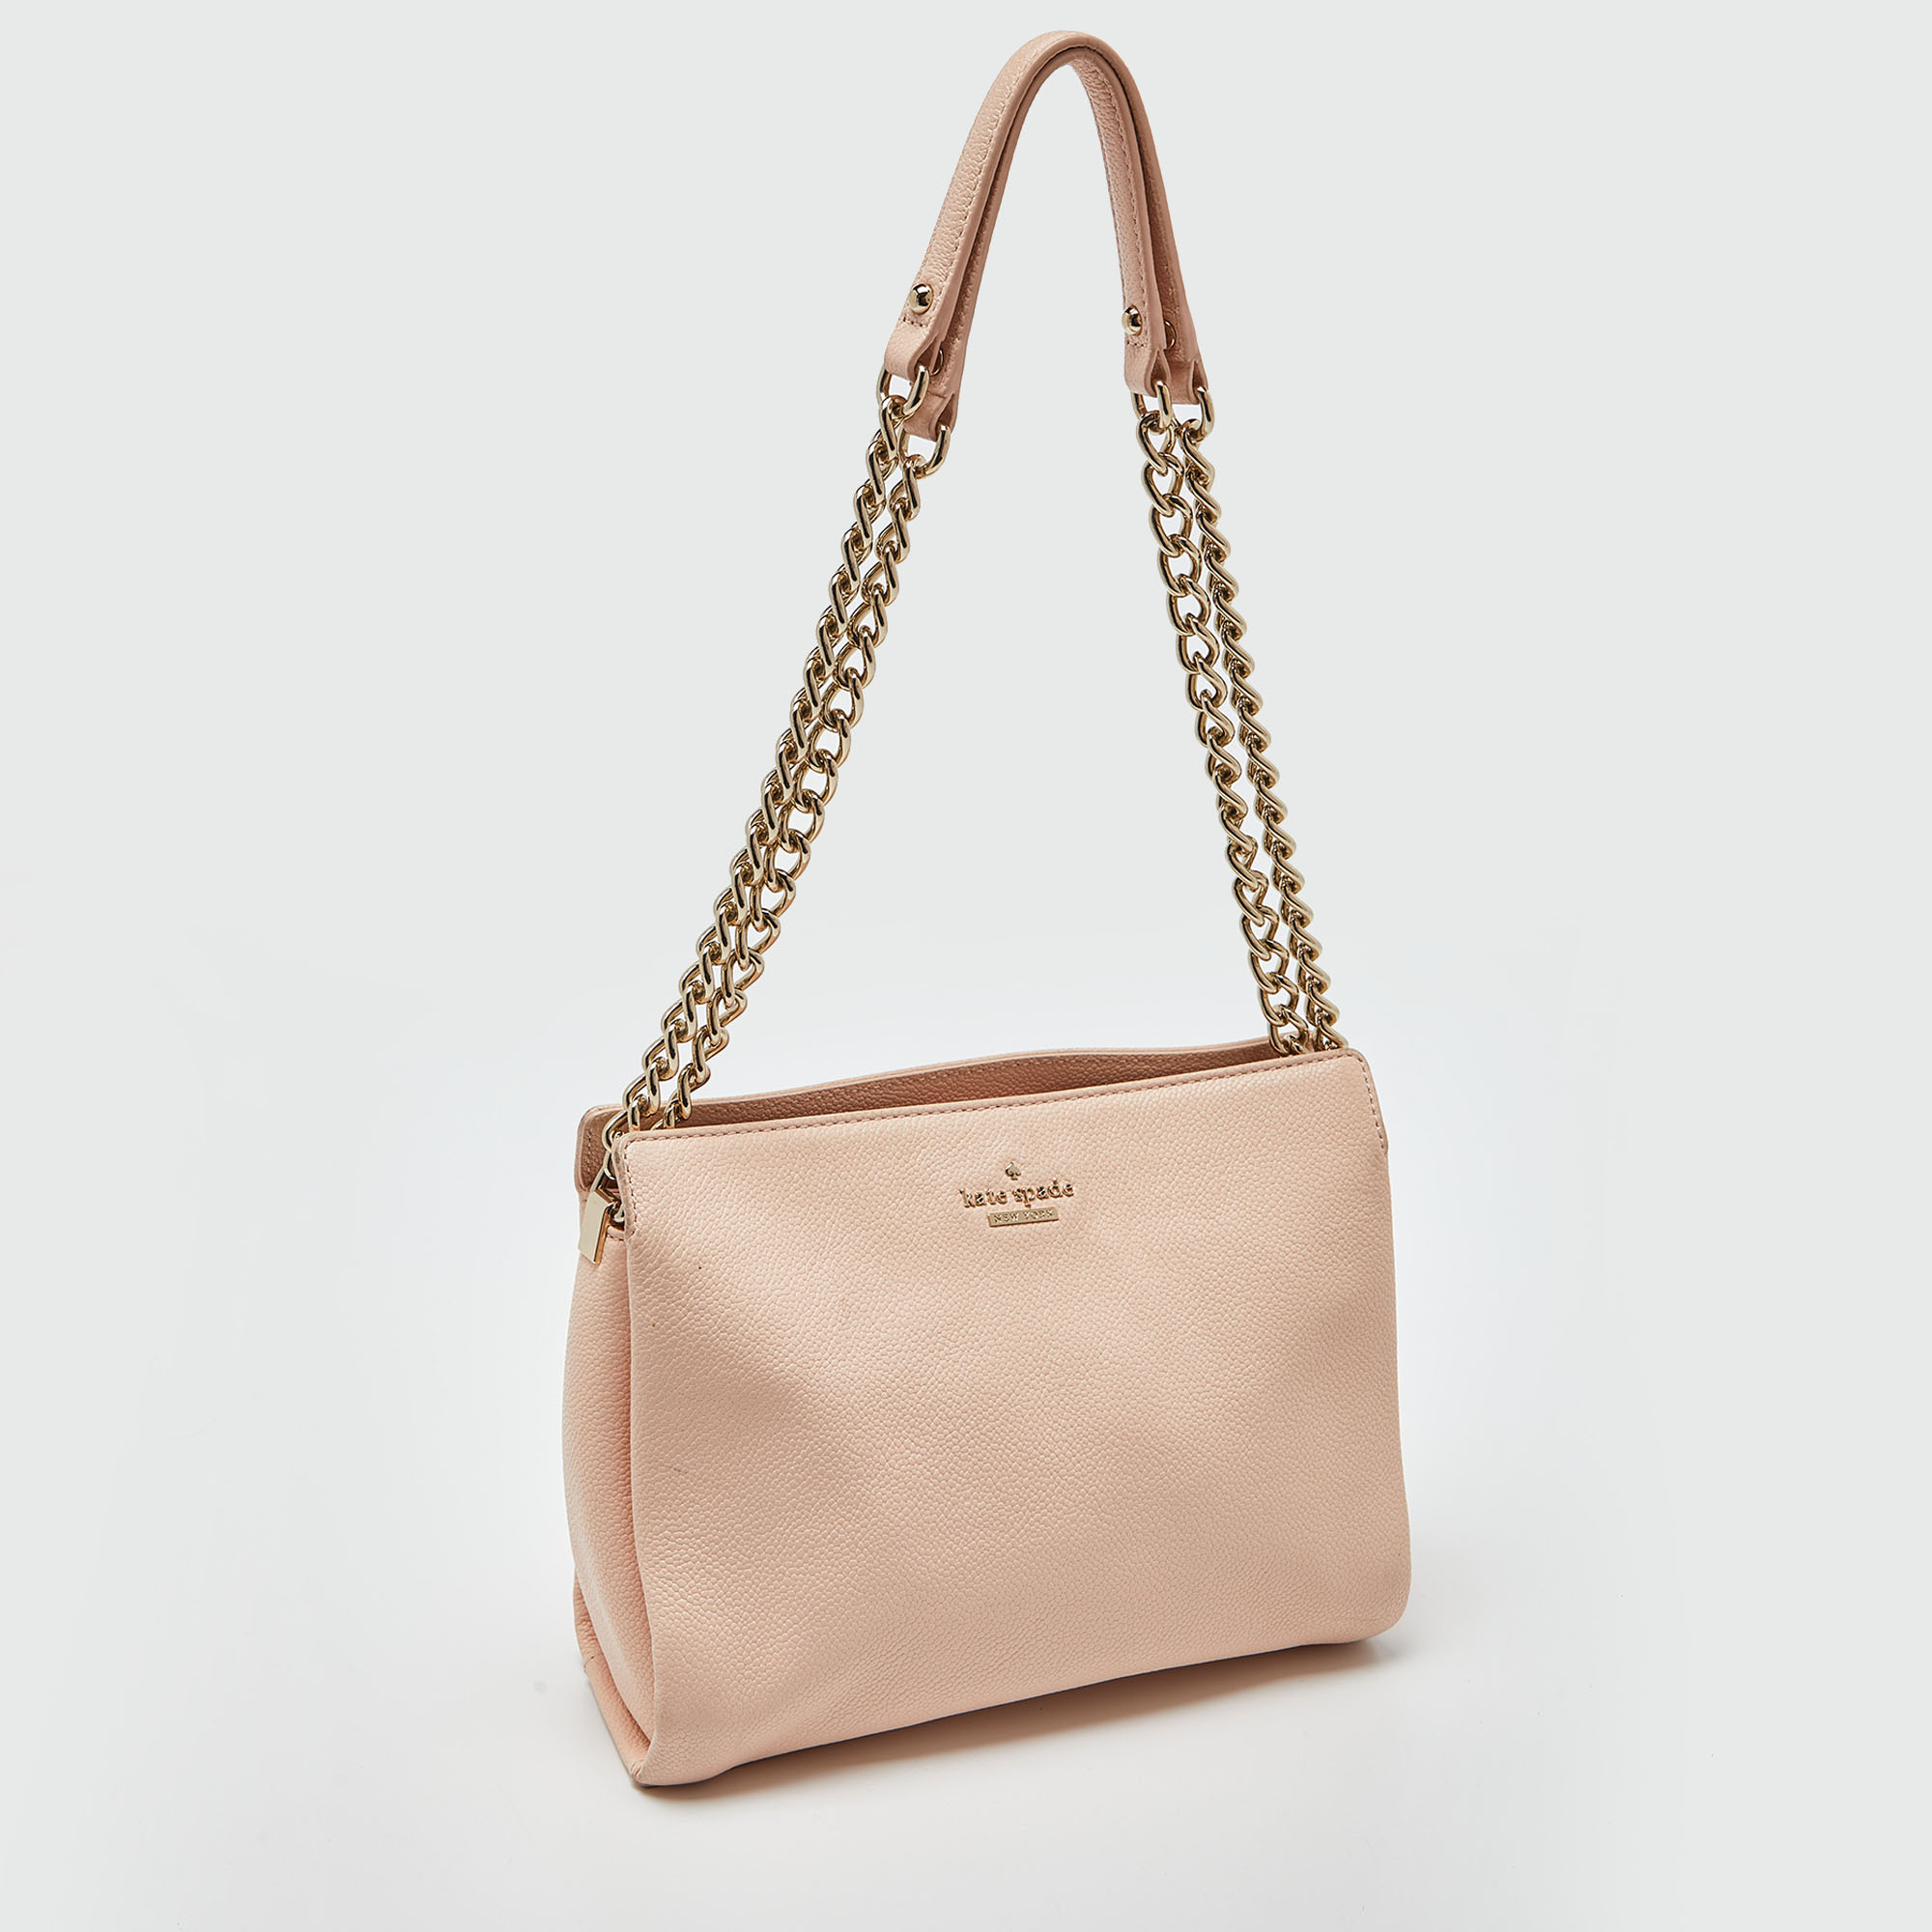 Kate Spade Peach Leather Chain Shoulder Bag